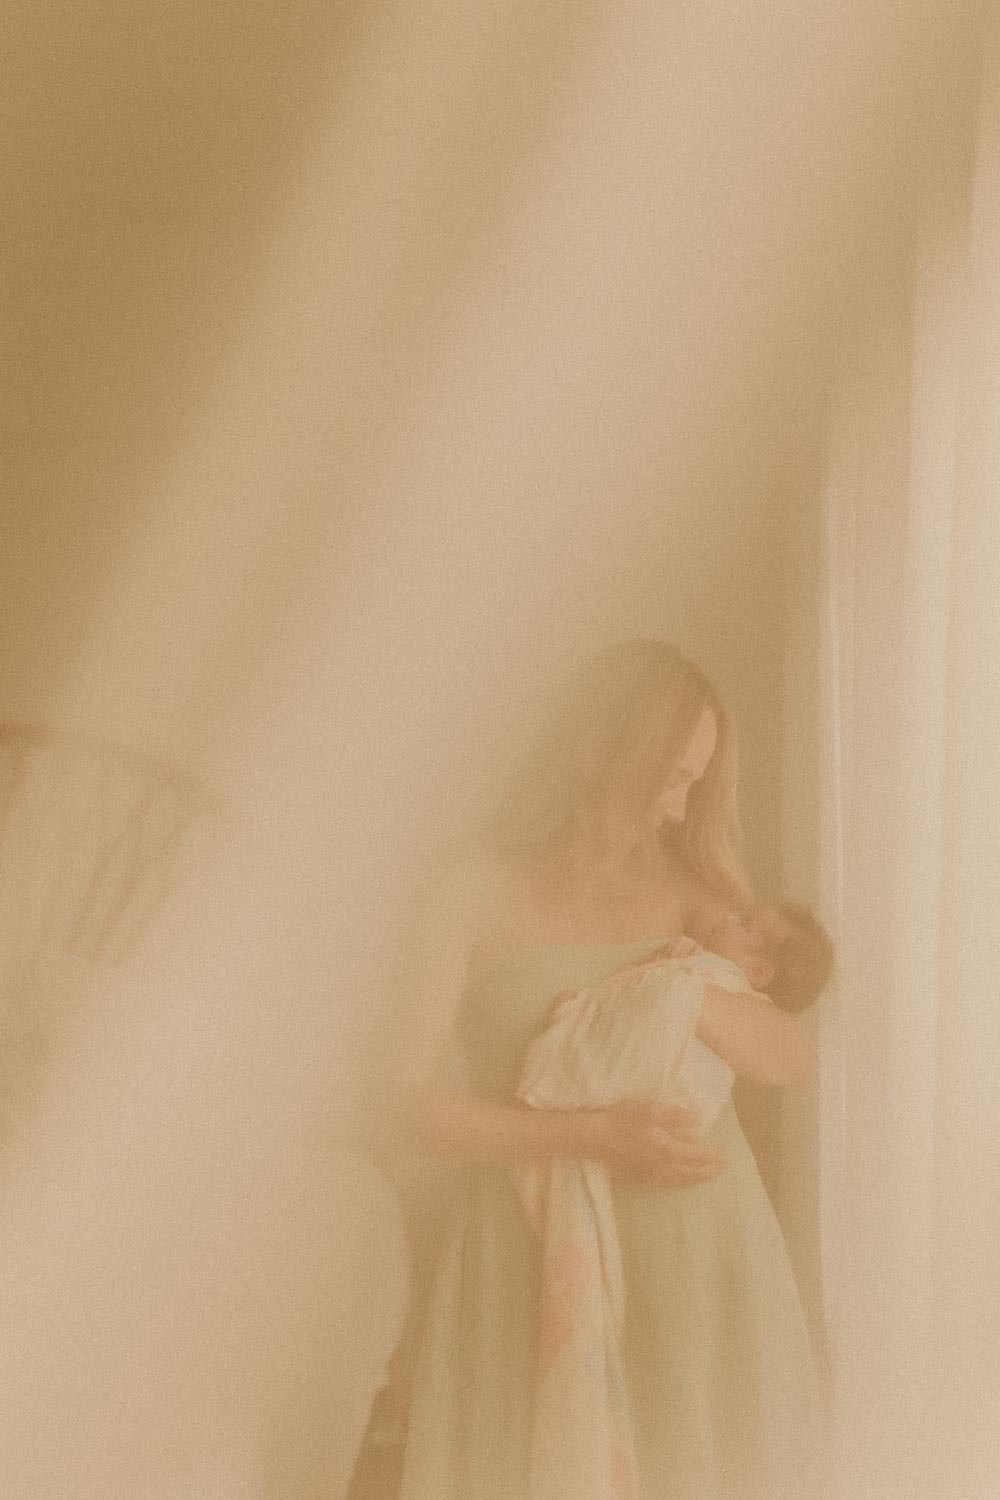 Sutherland-shire-newborn-photography-sydney-mum-and-newborn-through-curtain